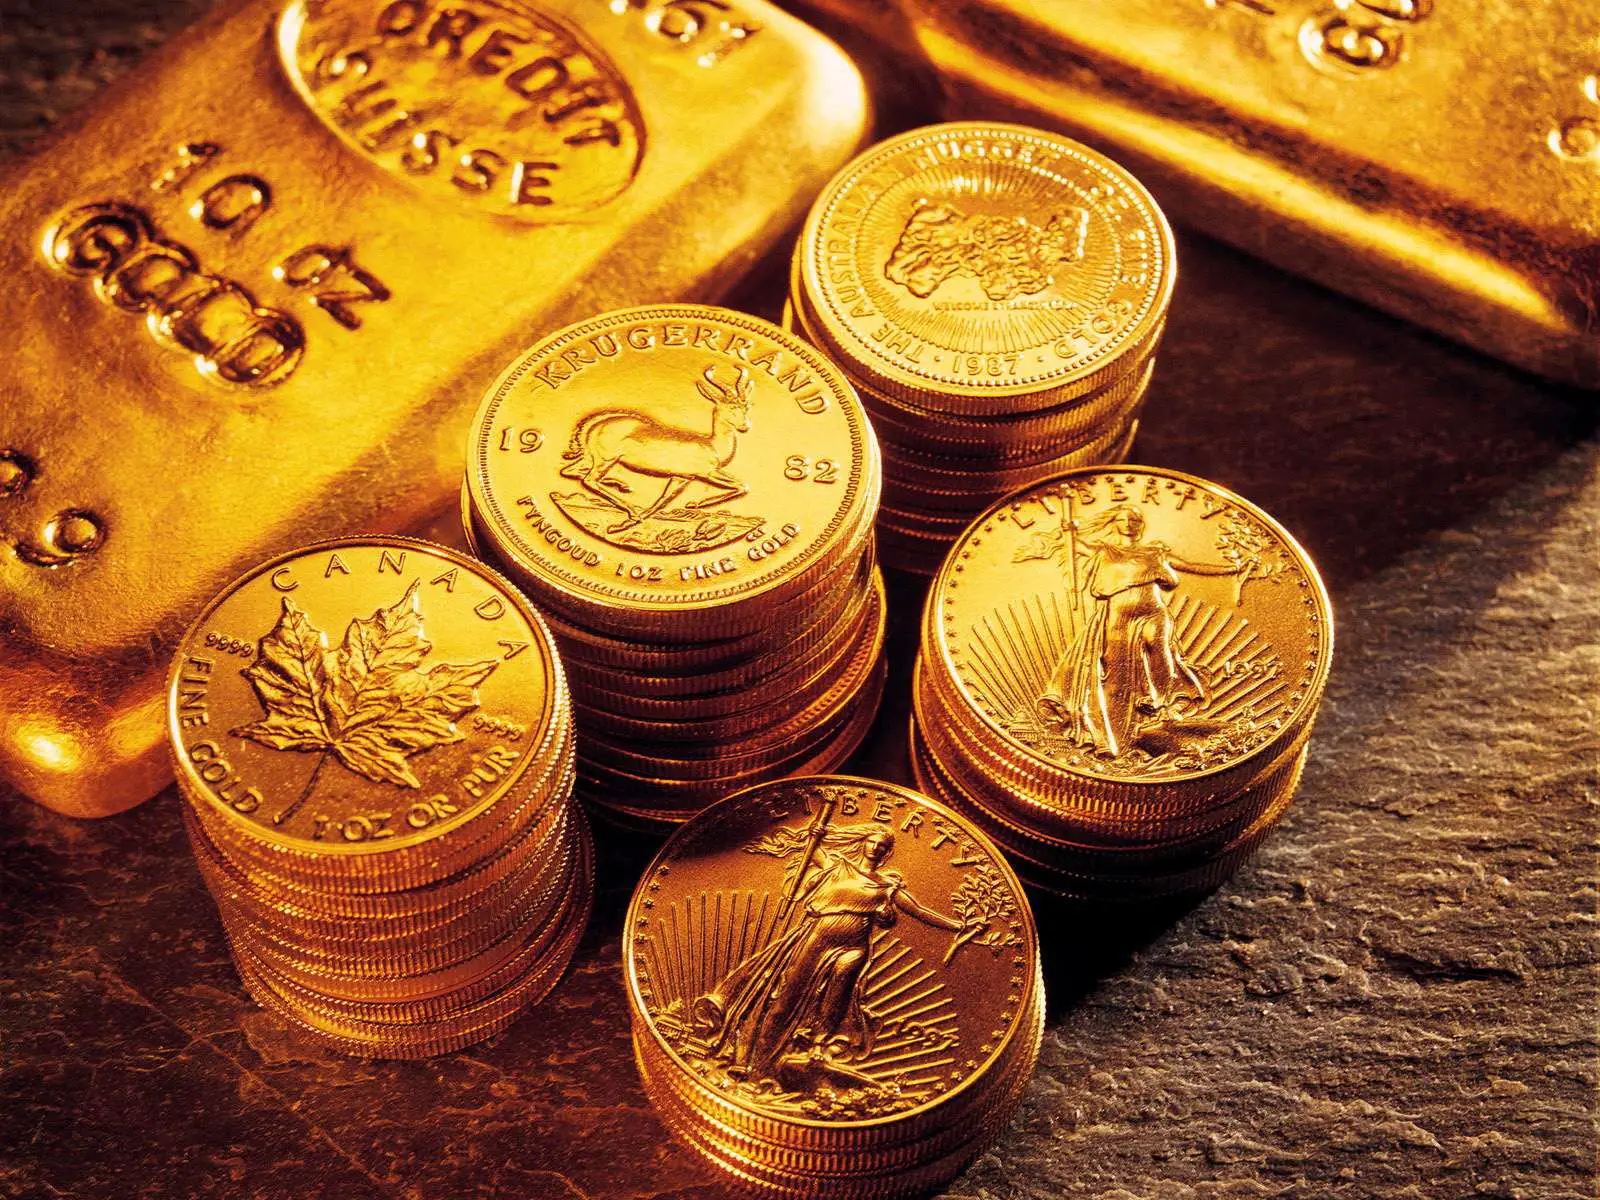 Demonetization of Gold Bullion Demand in India Deemed Temporary